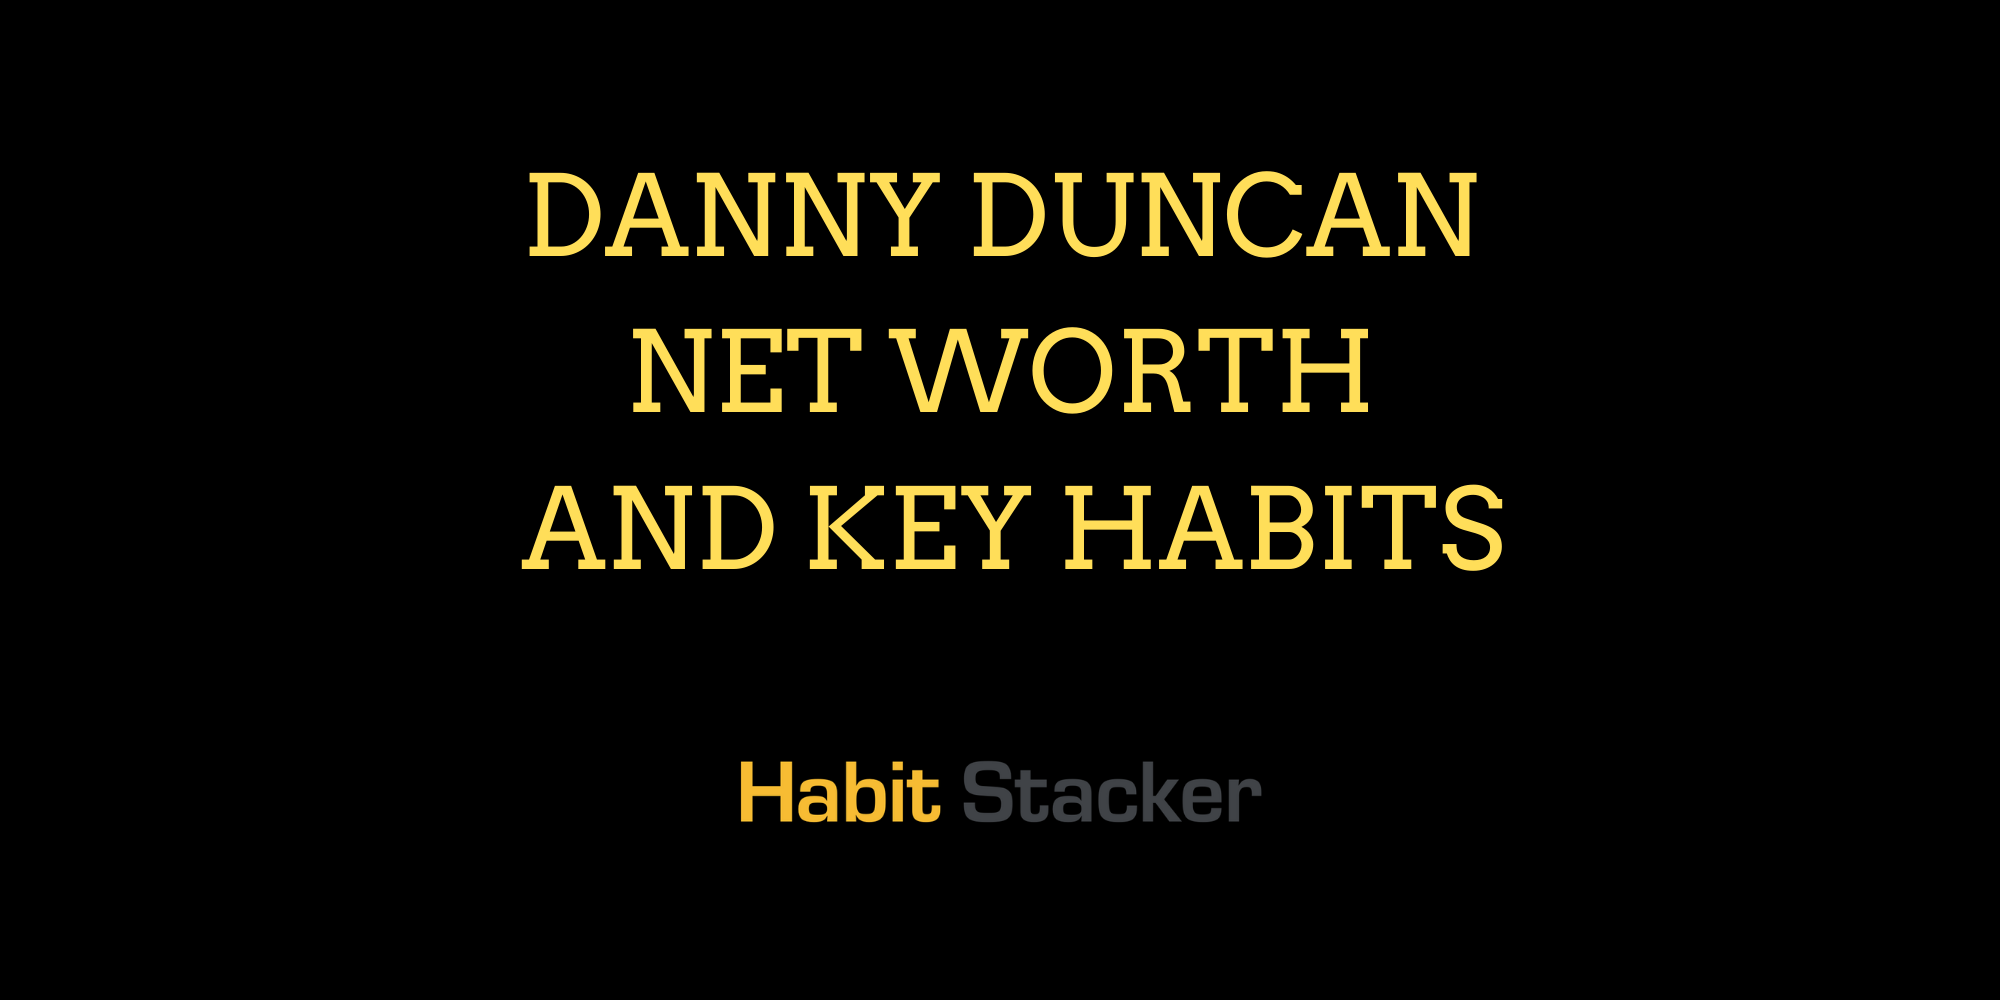 Danny Duncan Net Worth and Key Habits